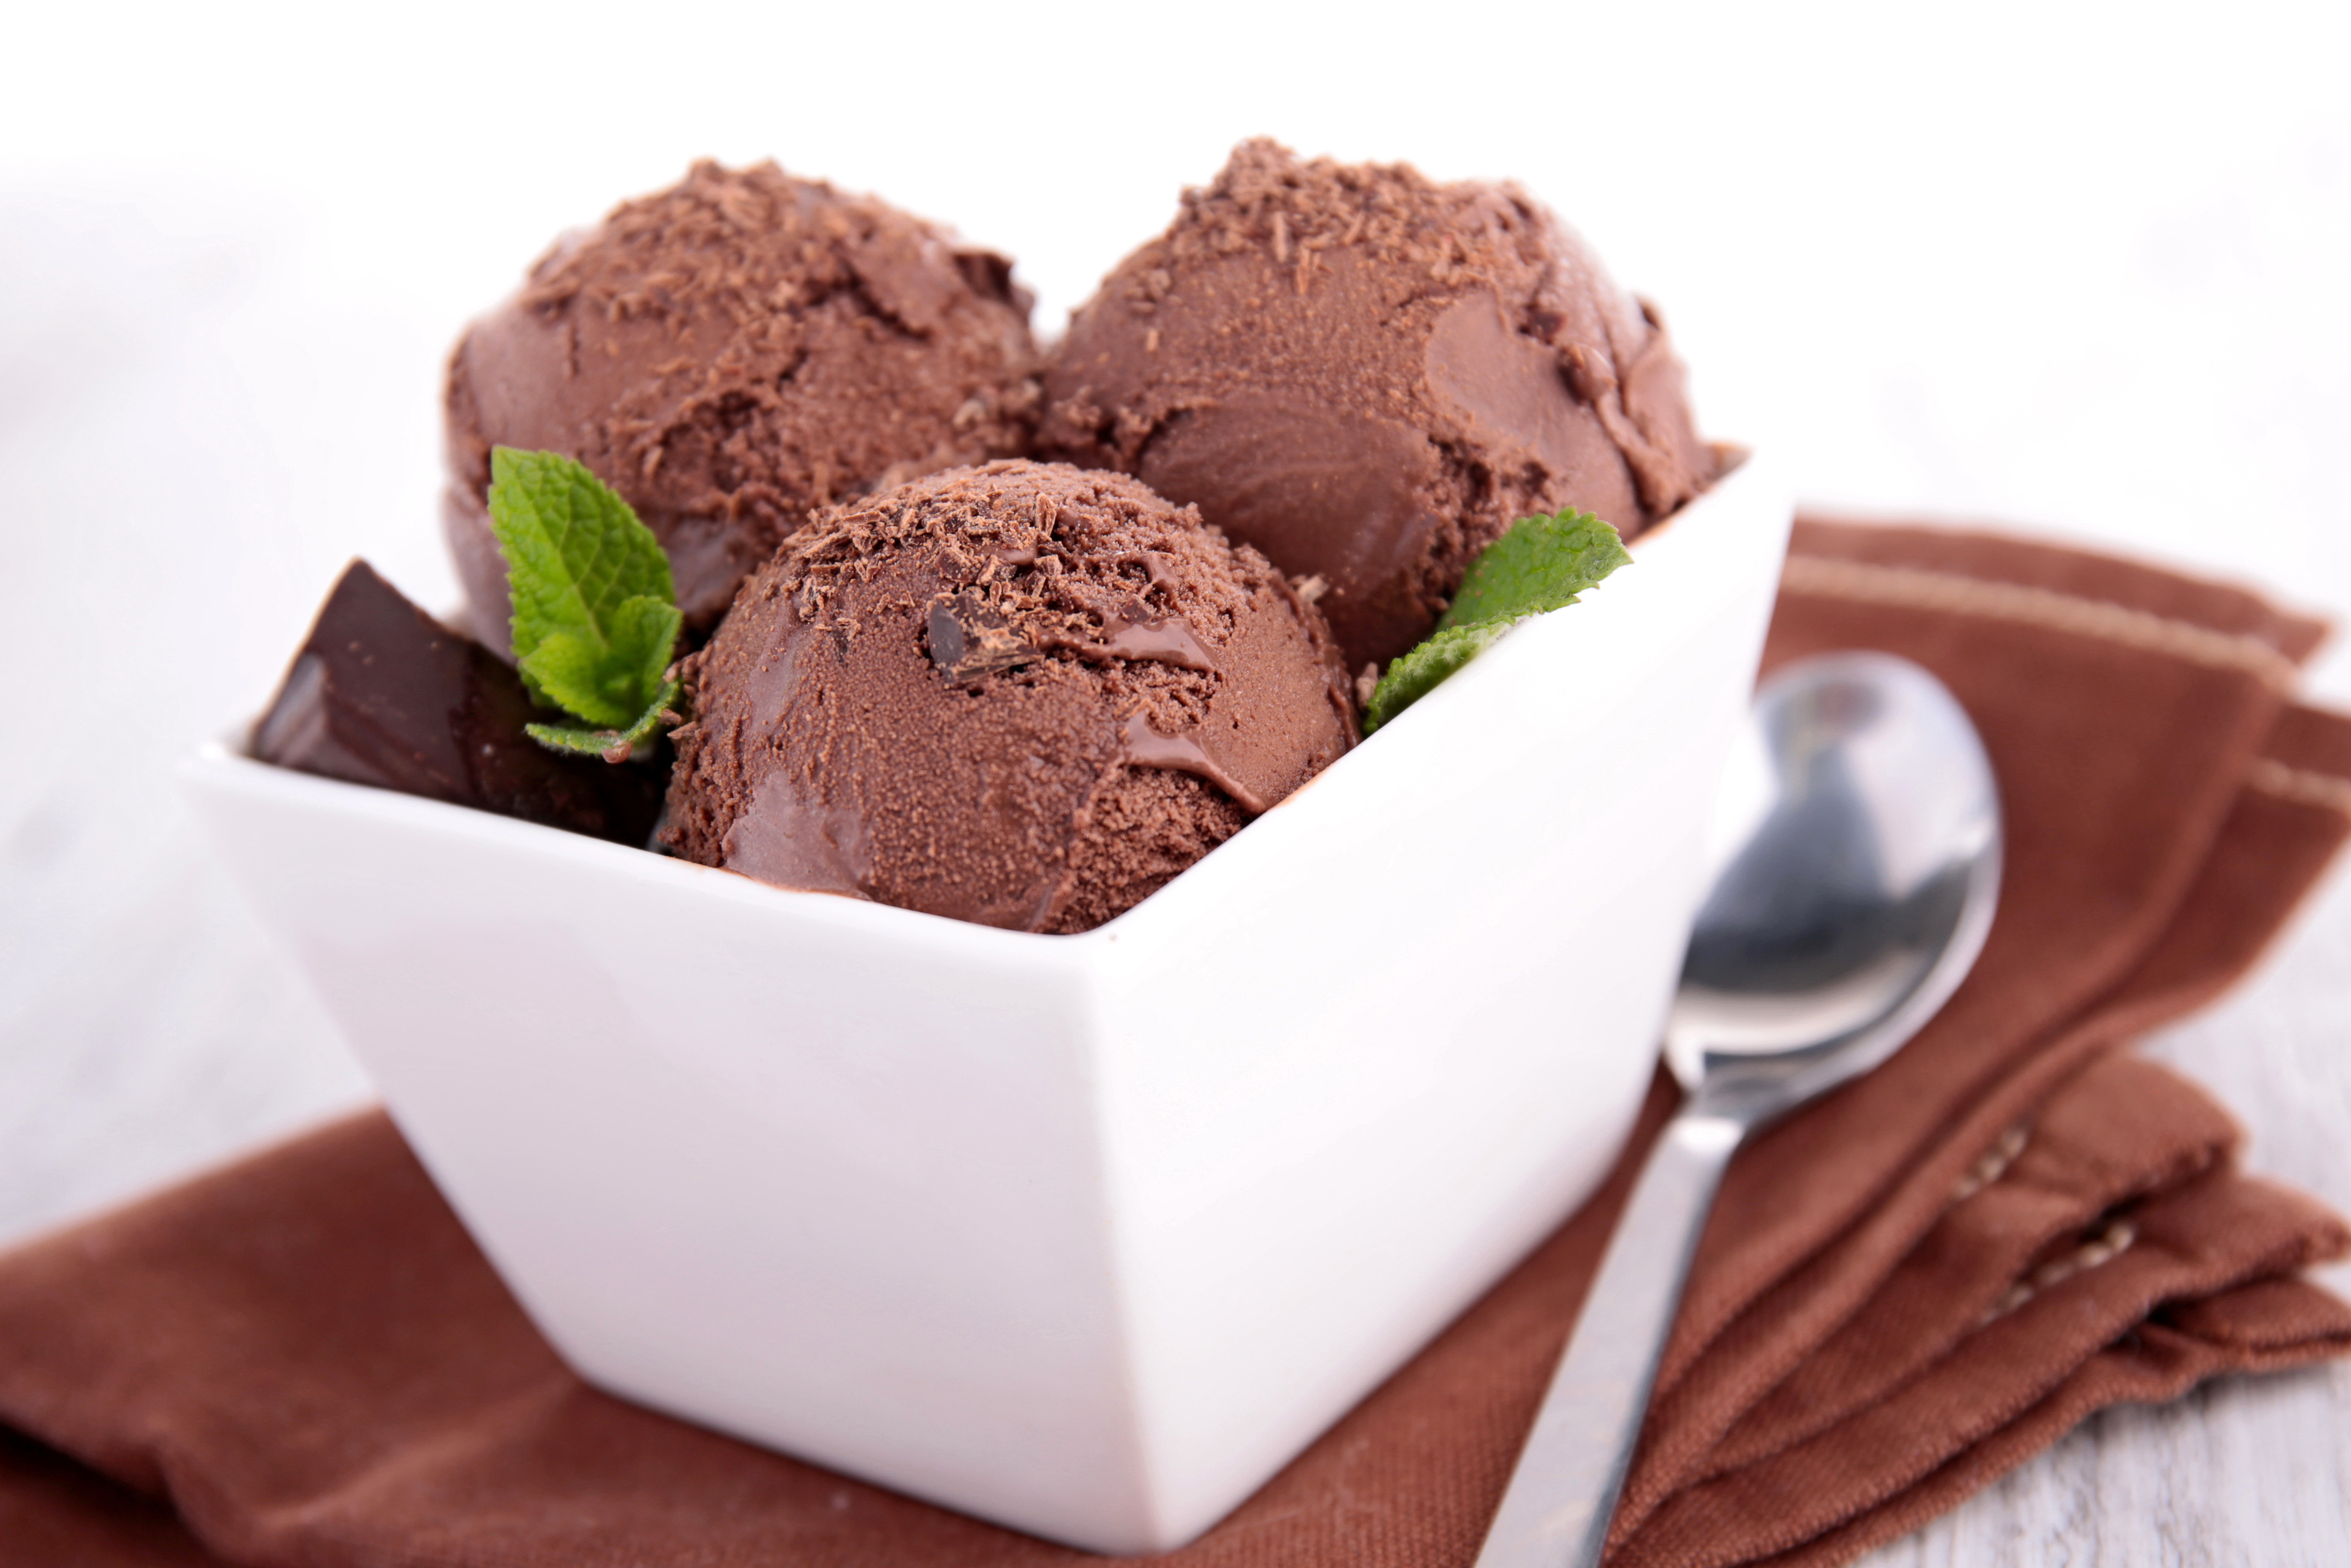 Choco ice. Мороженое пломбир шоколадный. Шоколадное мороженое от Джейми Оливера. Шарик мороженое. Мороженое с шоколадом.